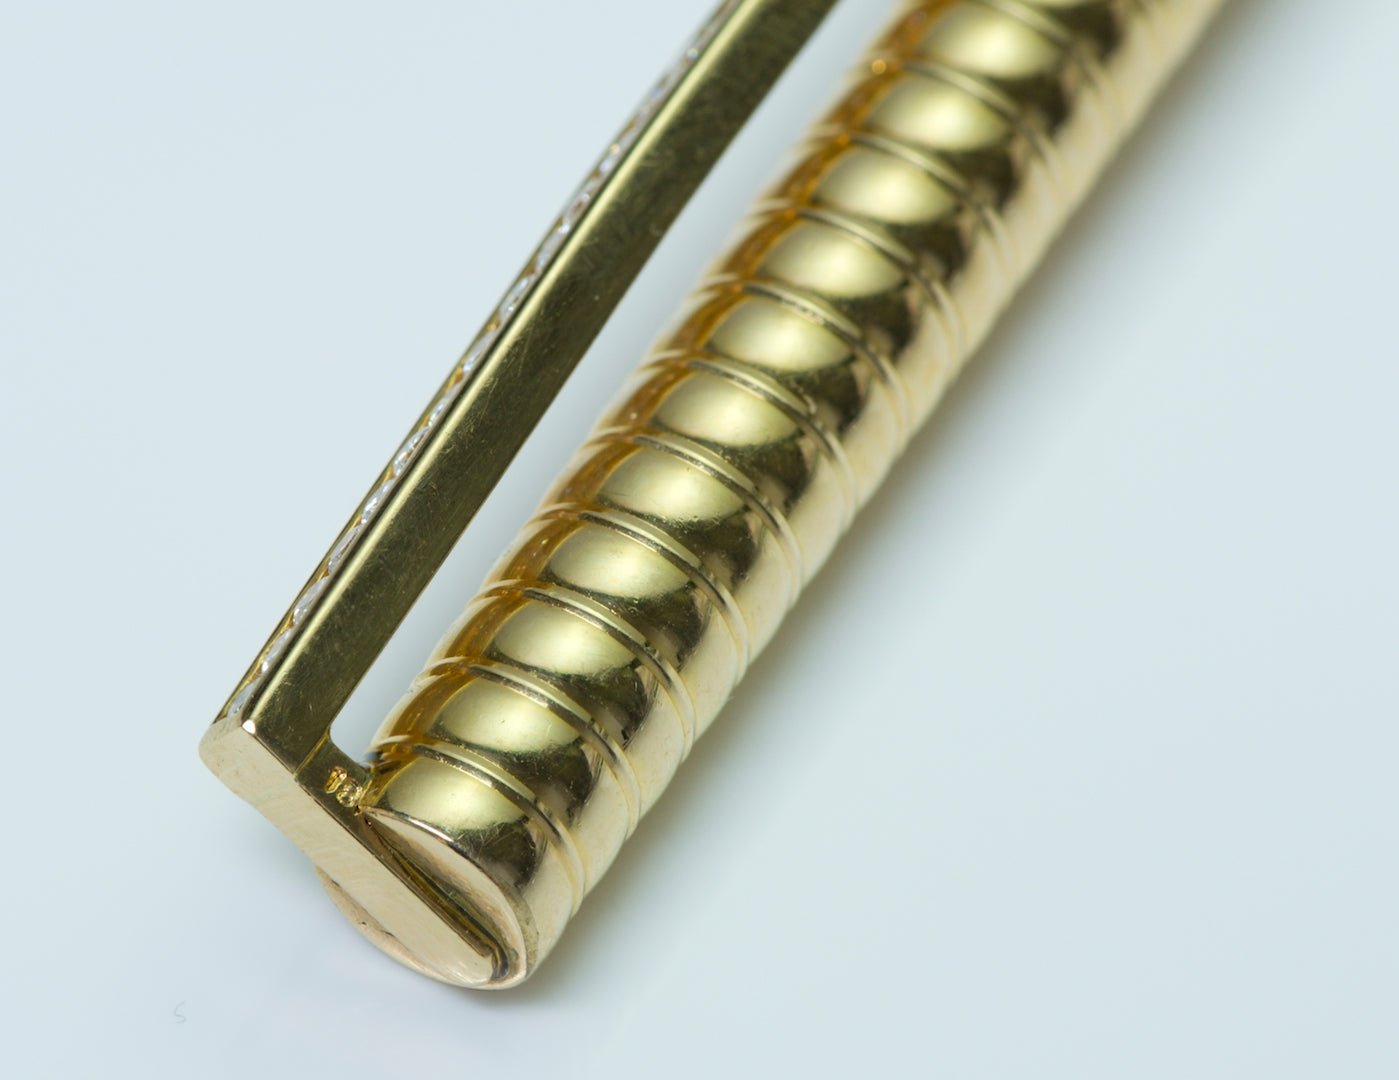 Dupont Gold Diamond Sapphire Ruby Pen